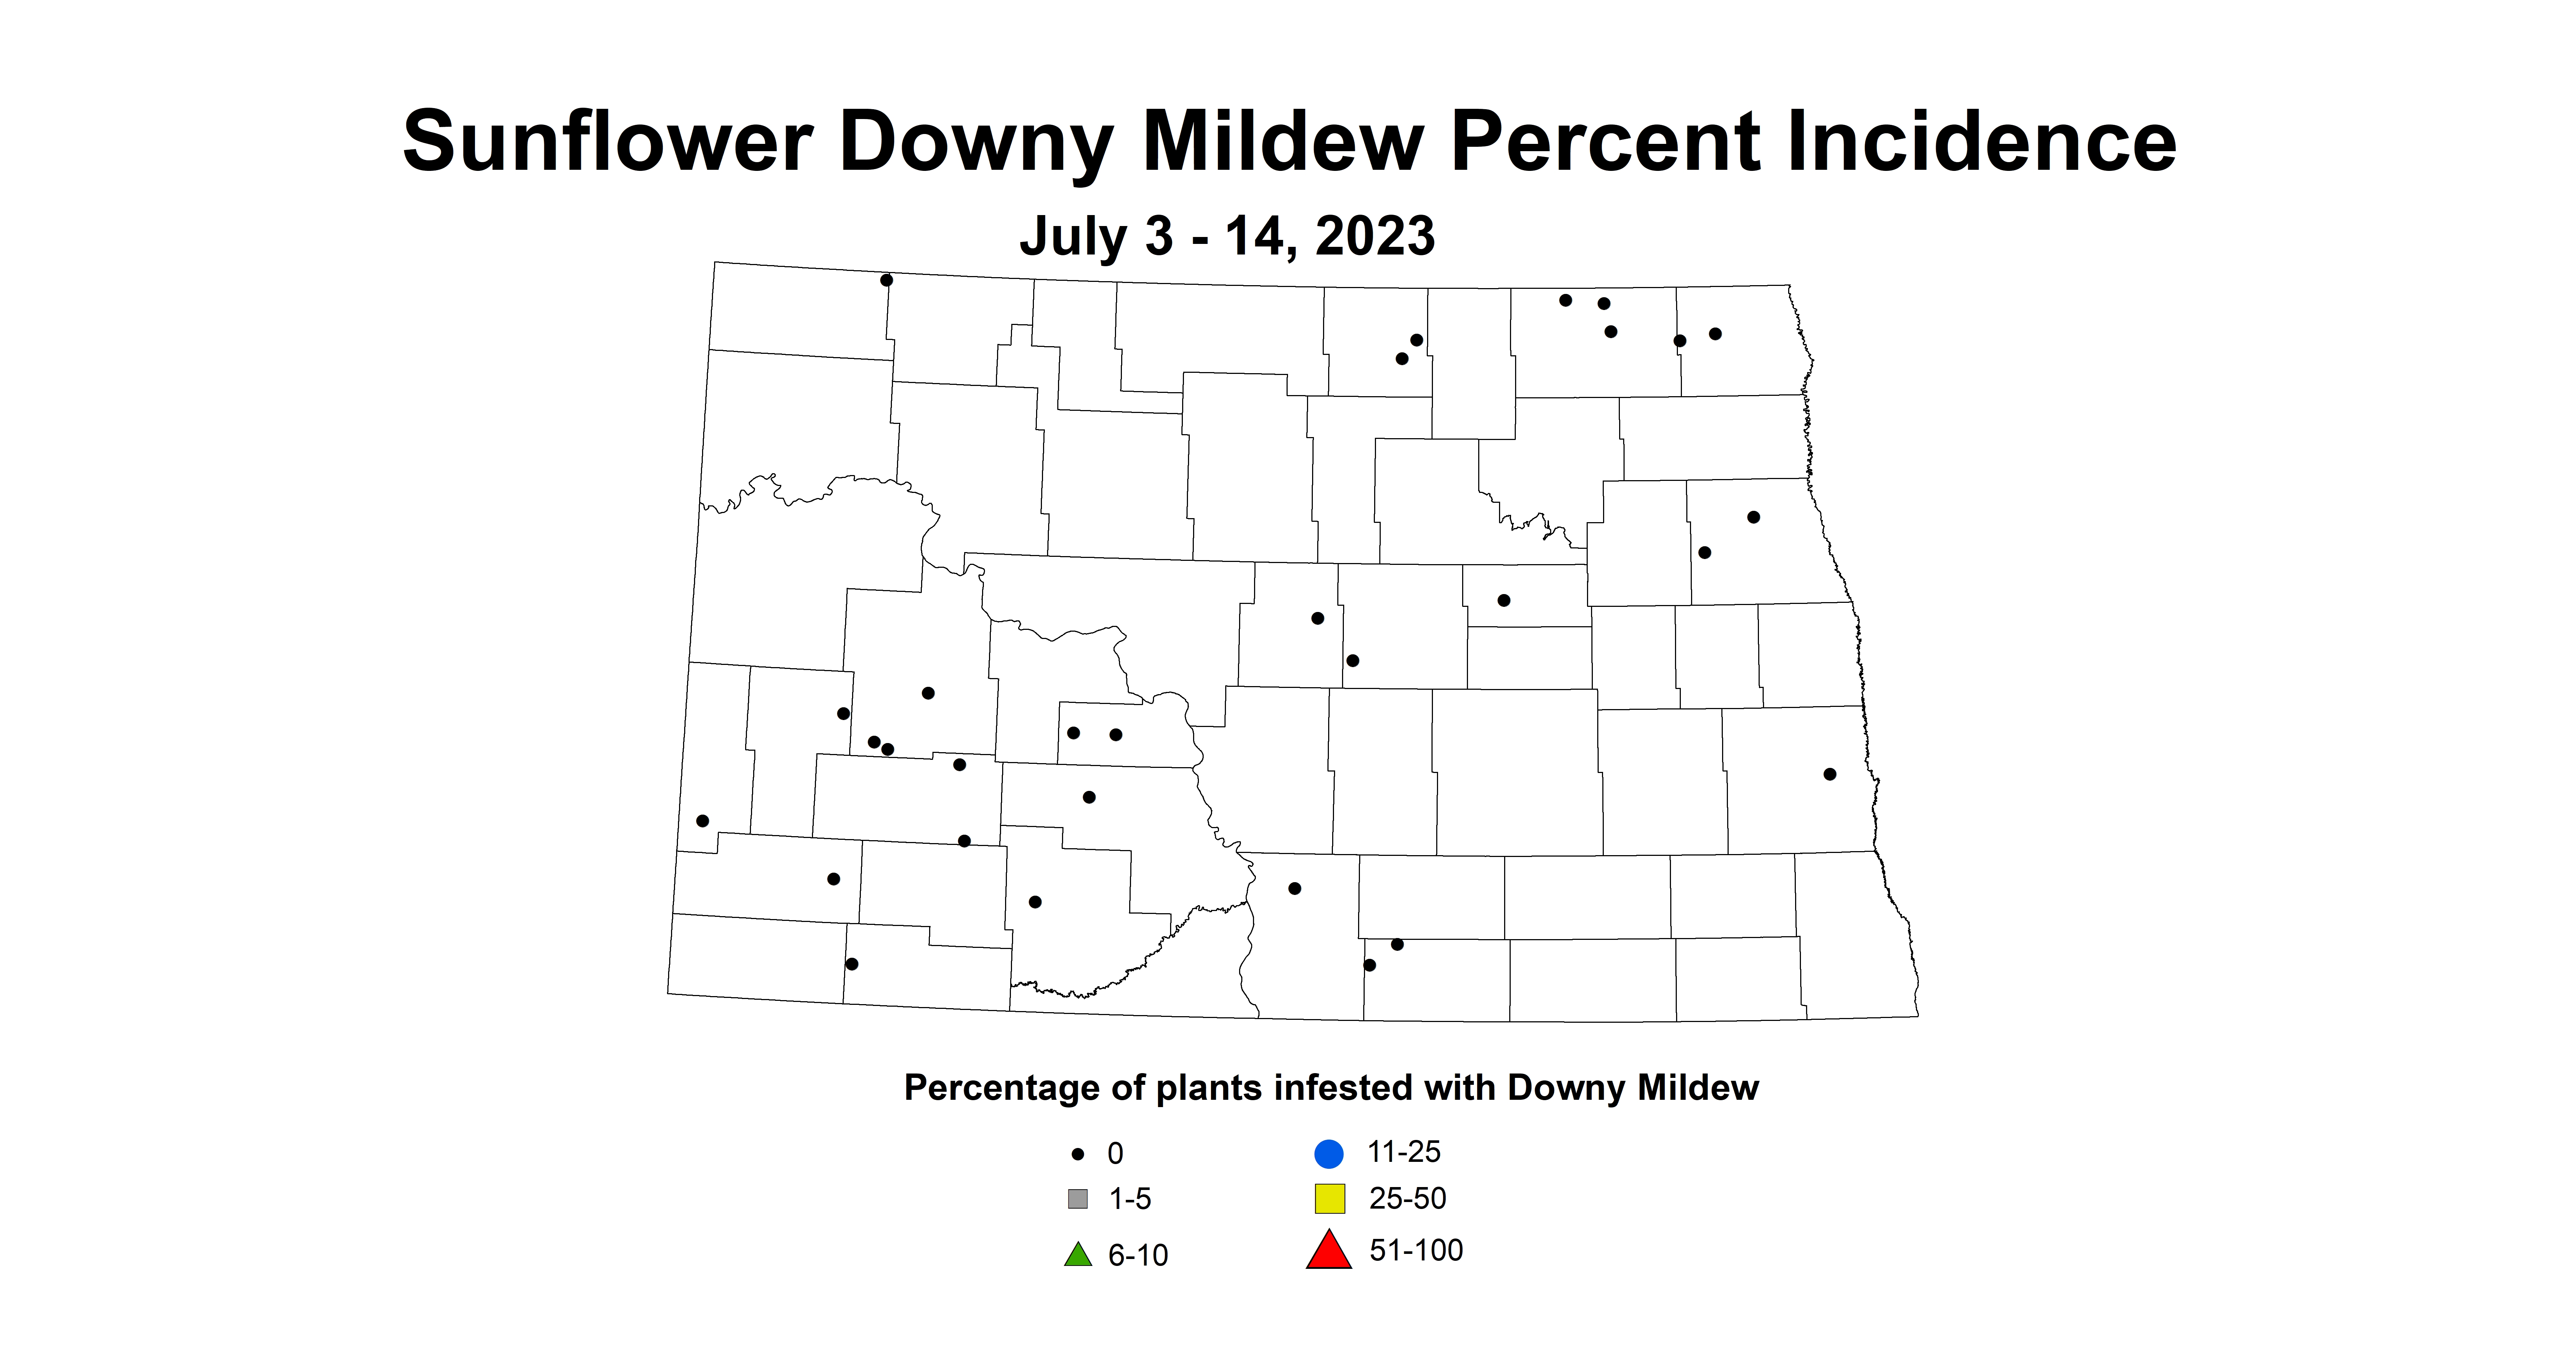 sunflower downy mildew incidence July 3-14 2023